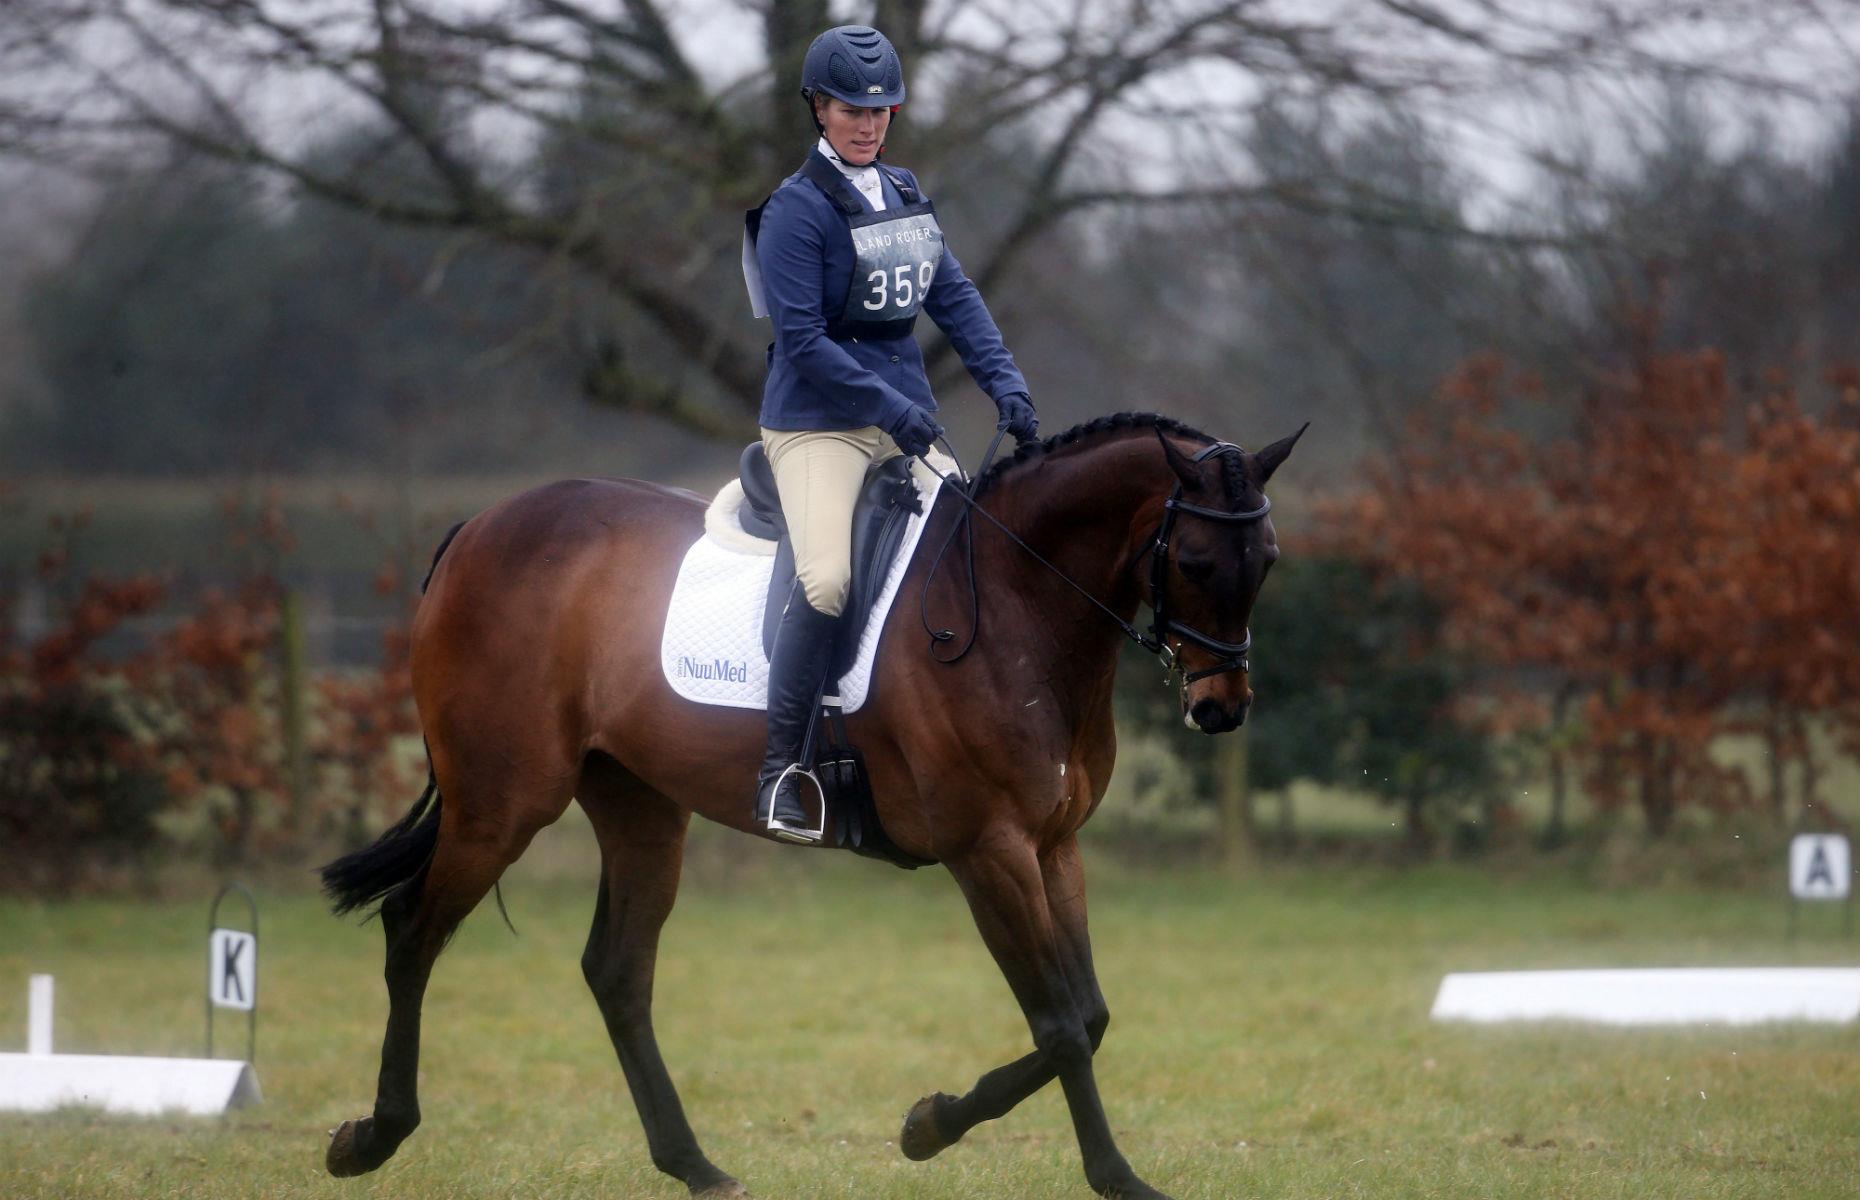 Zara Tindall née Phillips, UK: equestrian rider